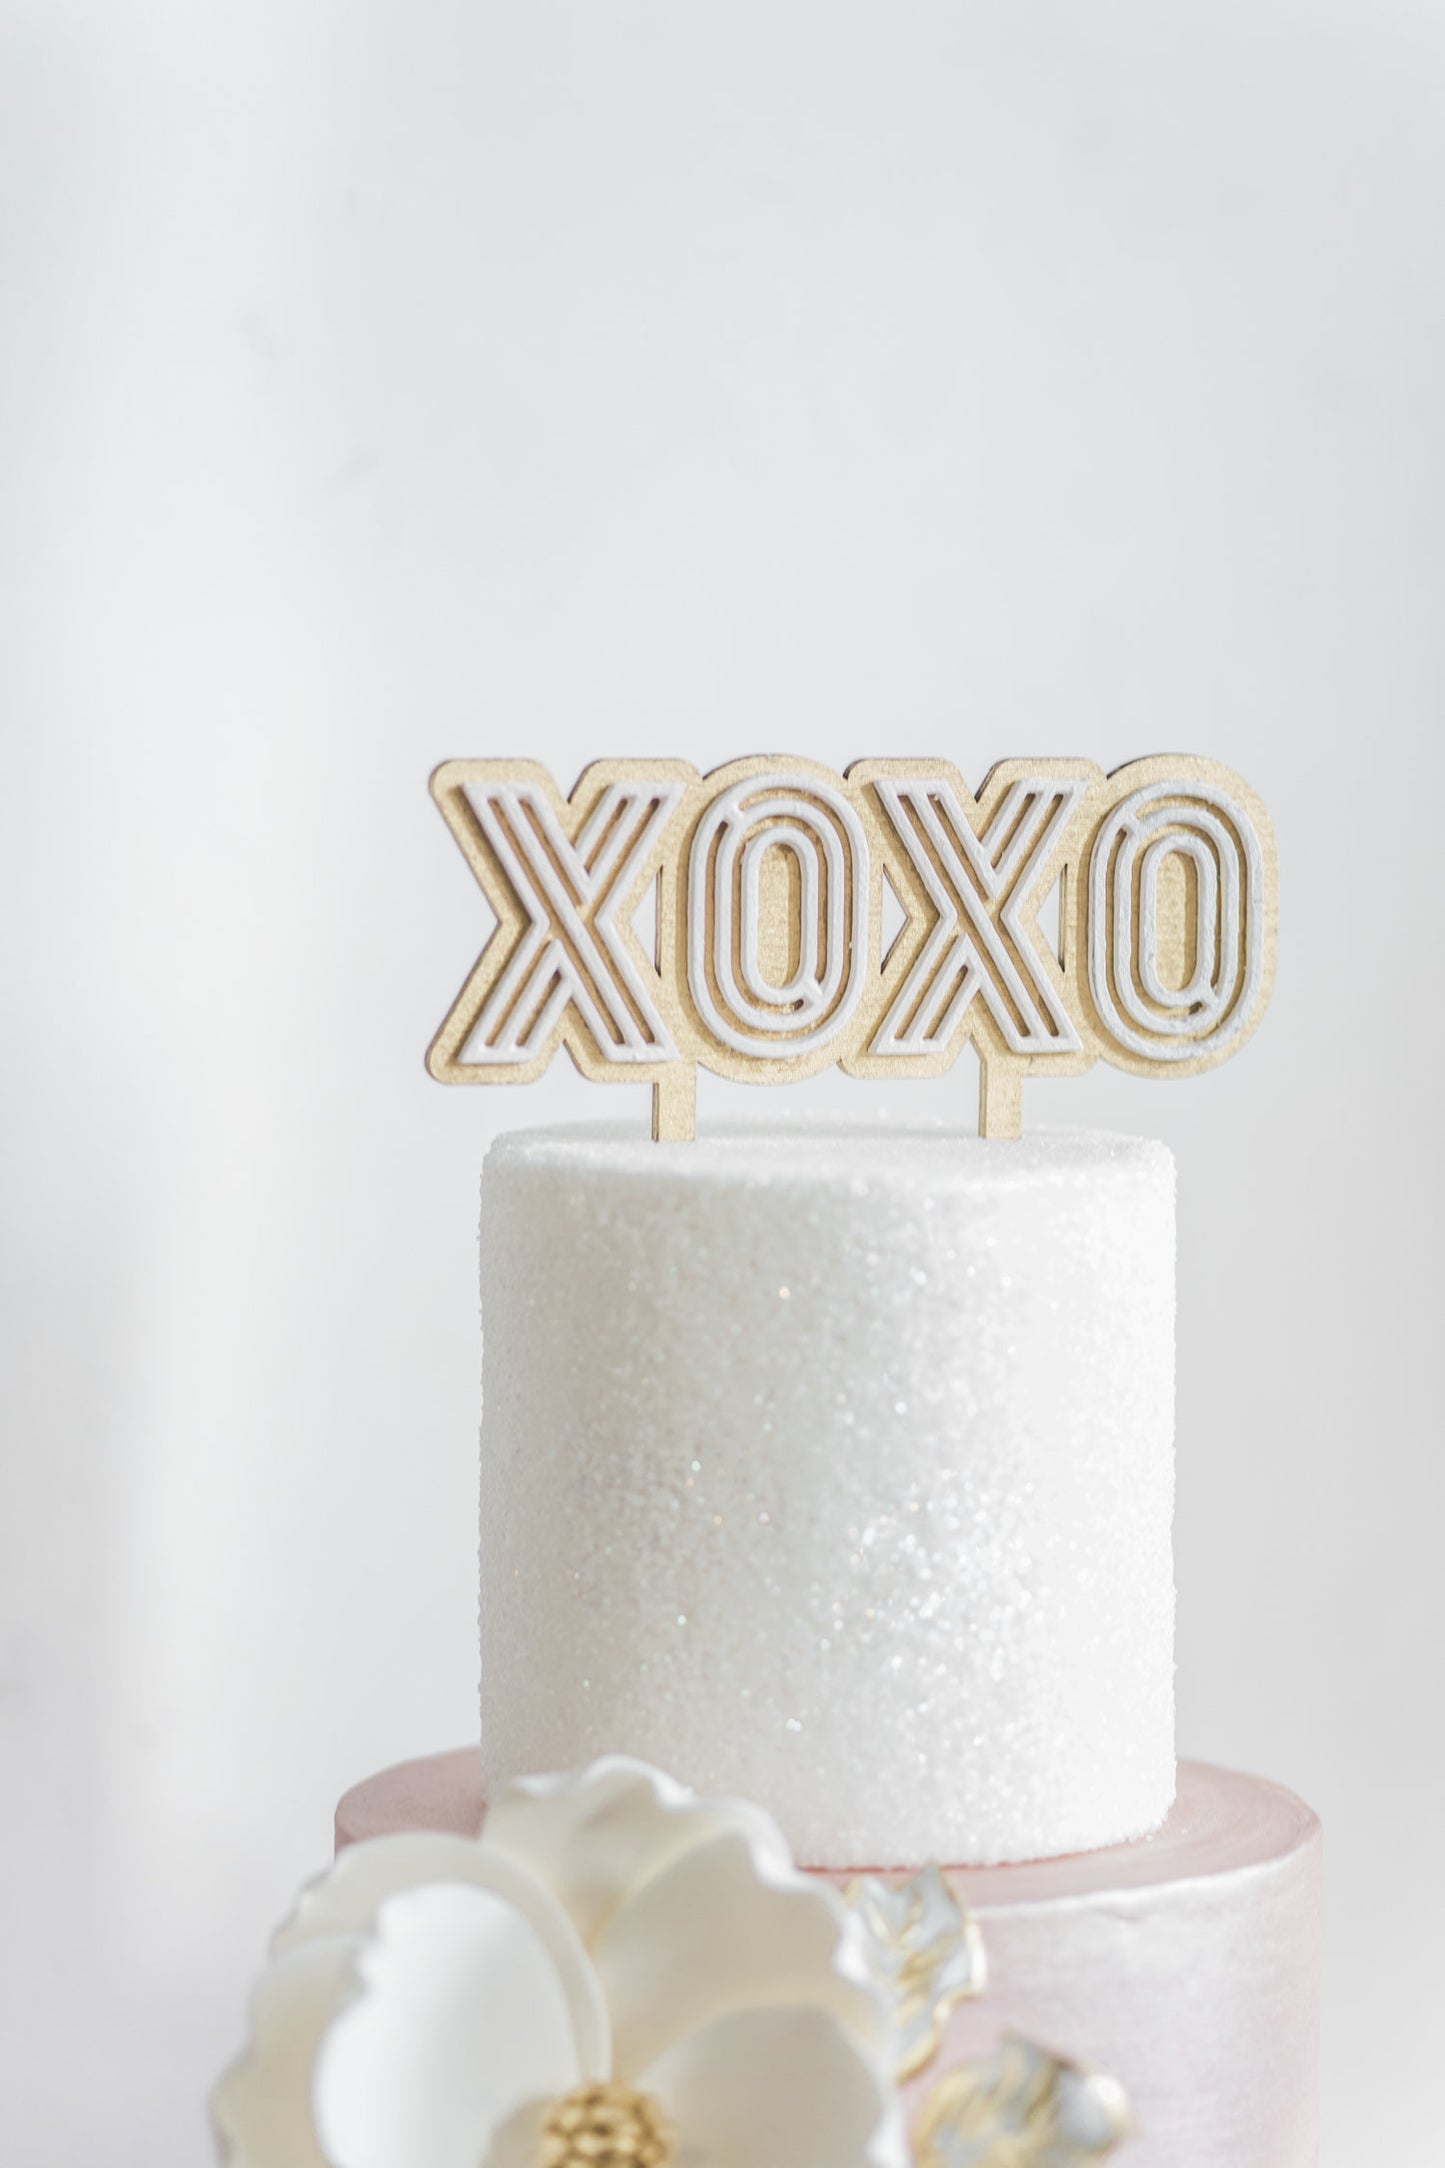 "XOXO" 2-Layered Cake Topper